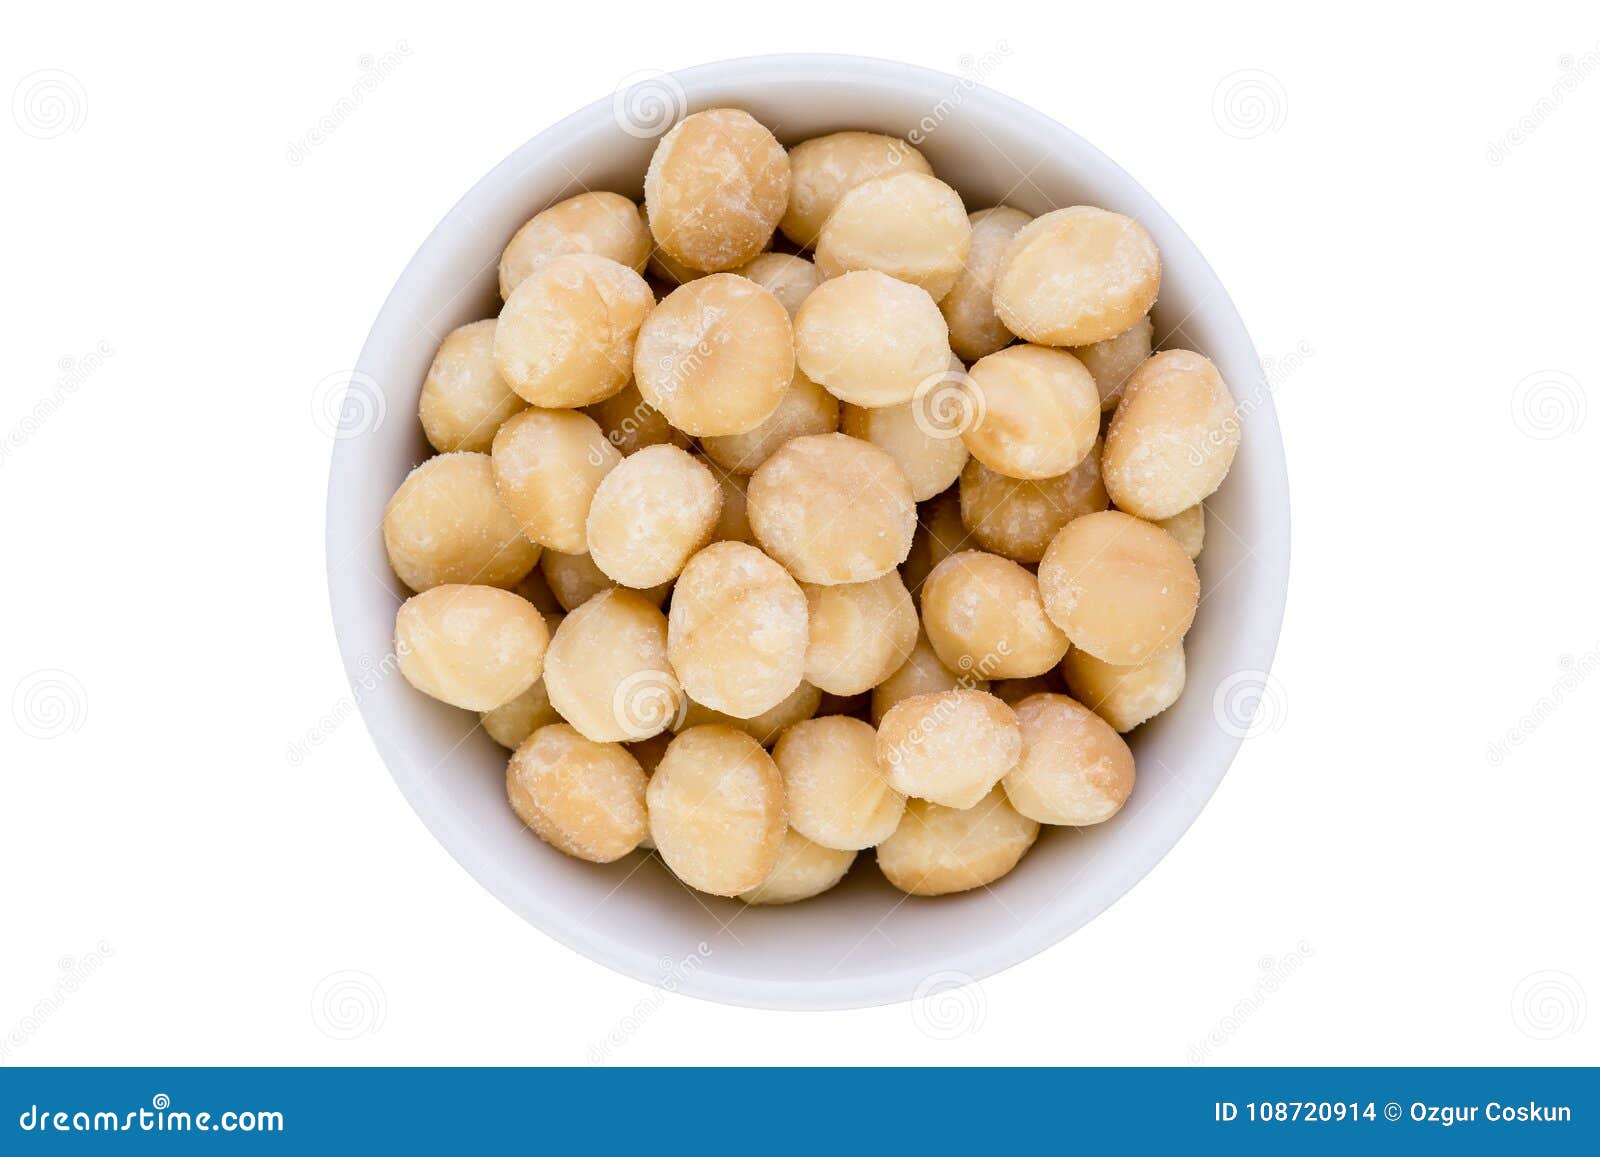 bowl of fresh healthy shelled macadamia nuts